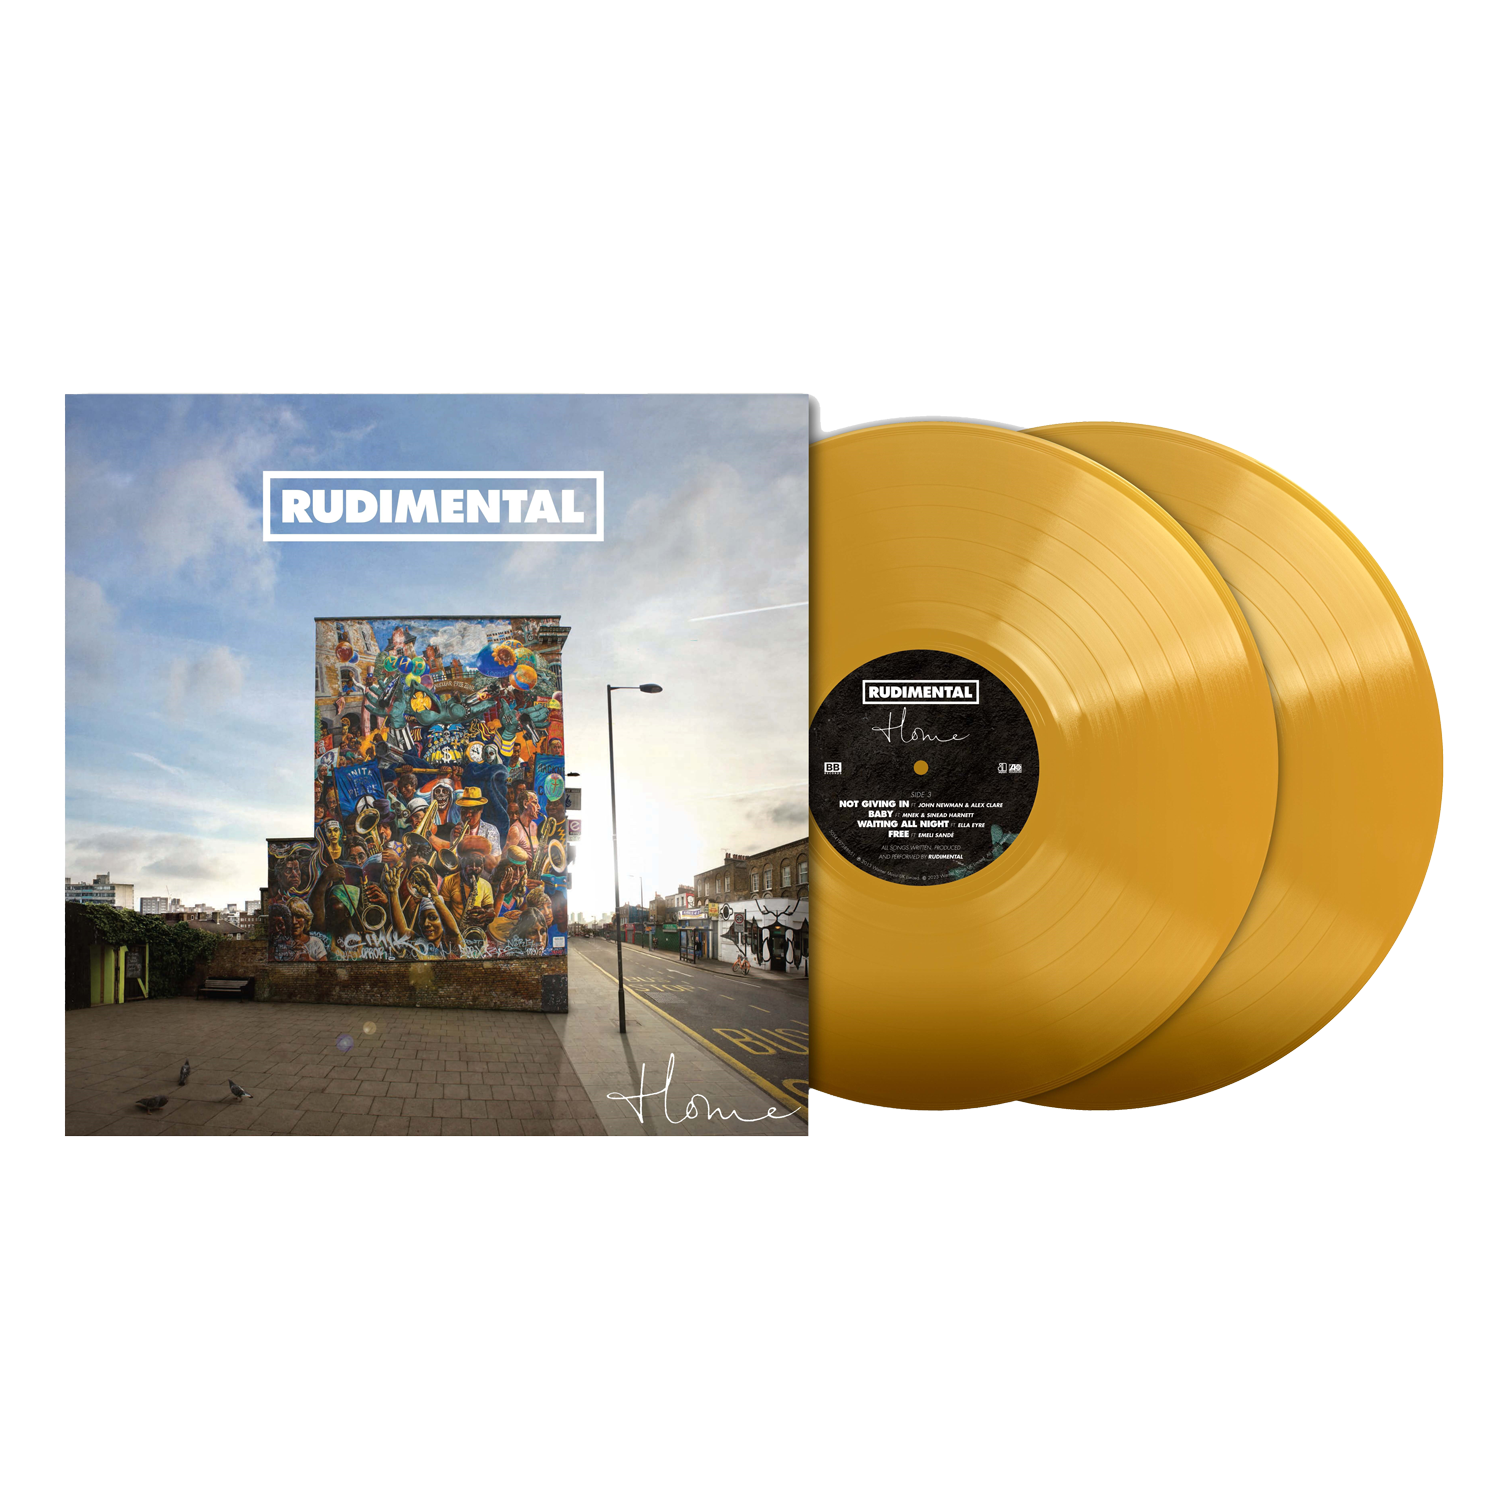 Rudimental - Home (10th Anniversary Edition): Limited Edition Gold Vinyl 2LP